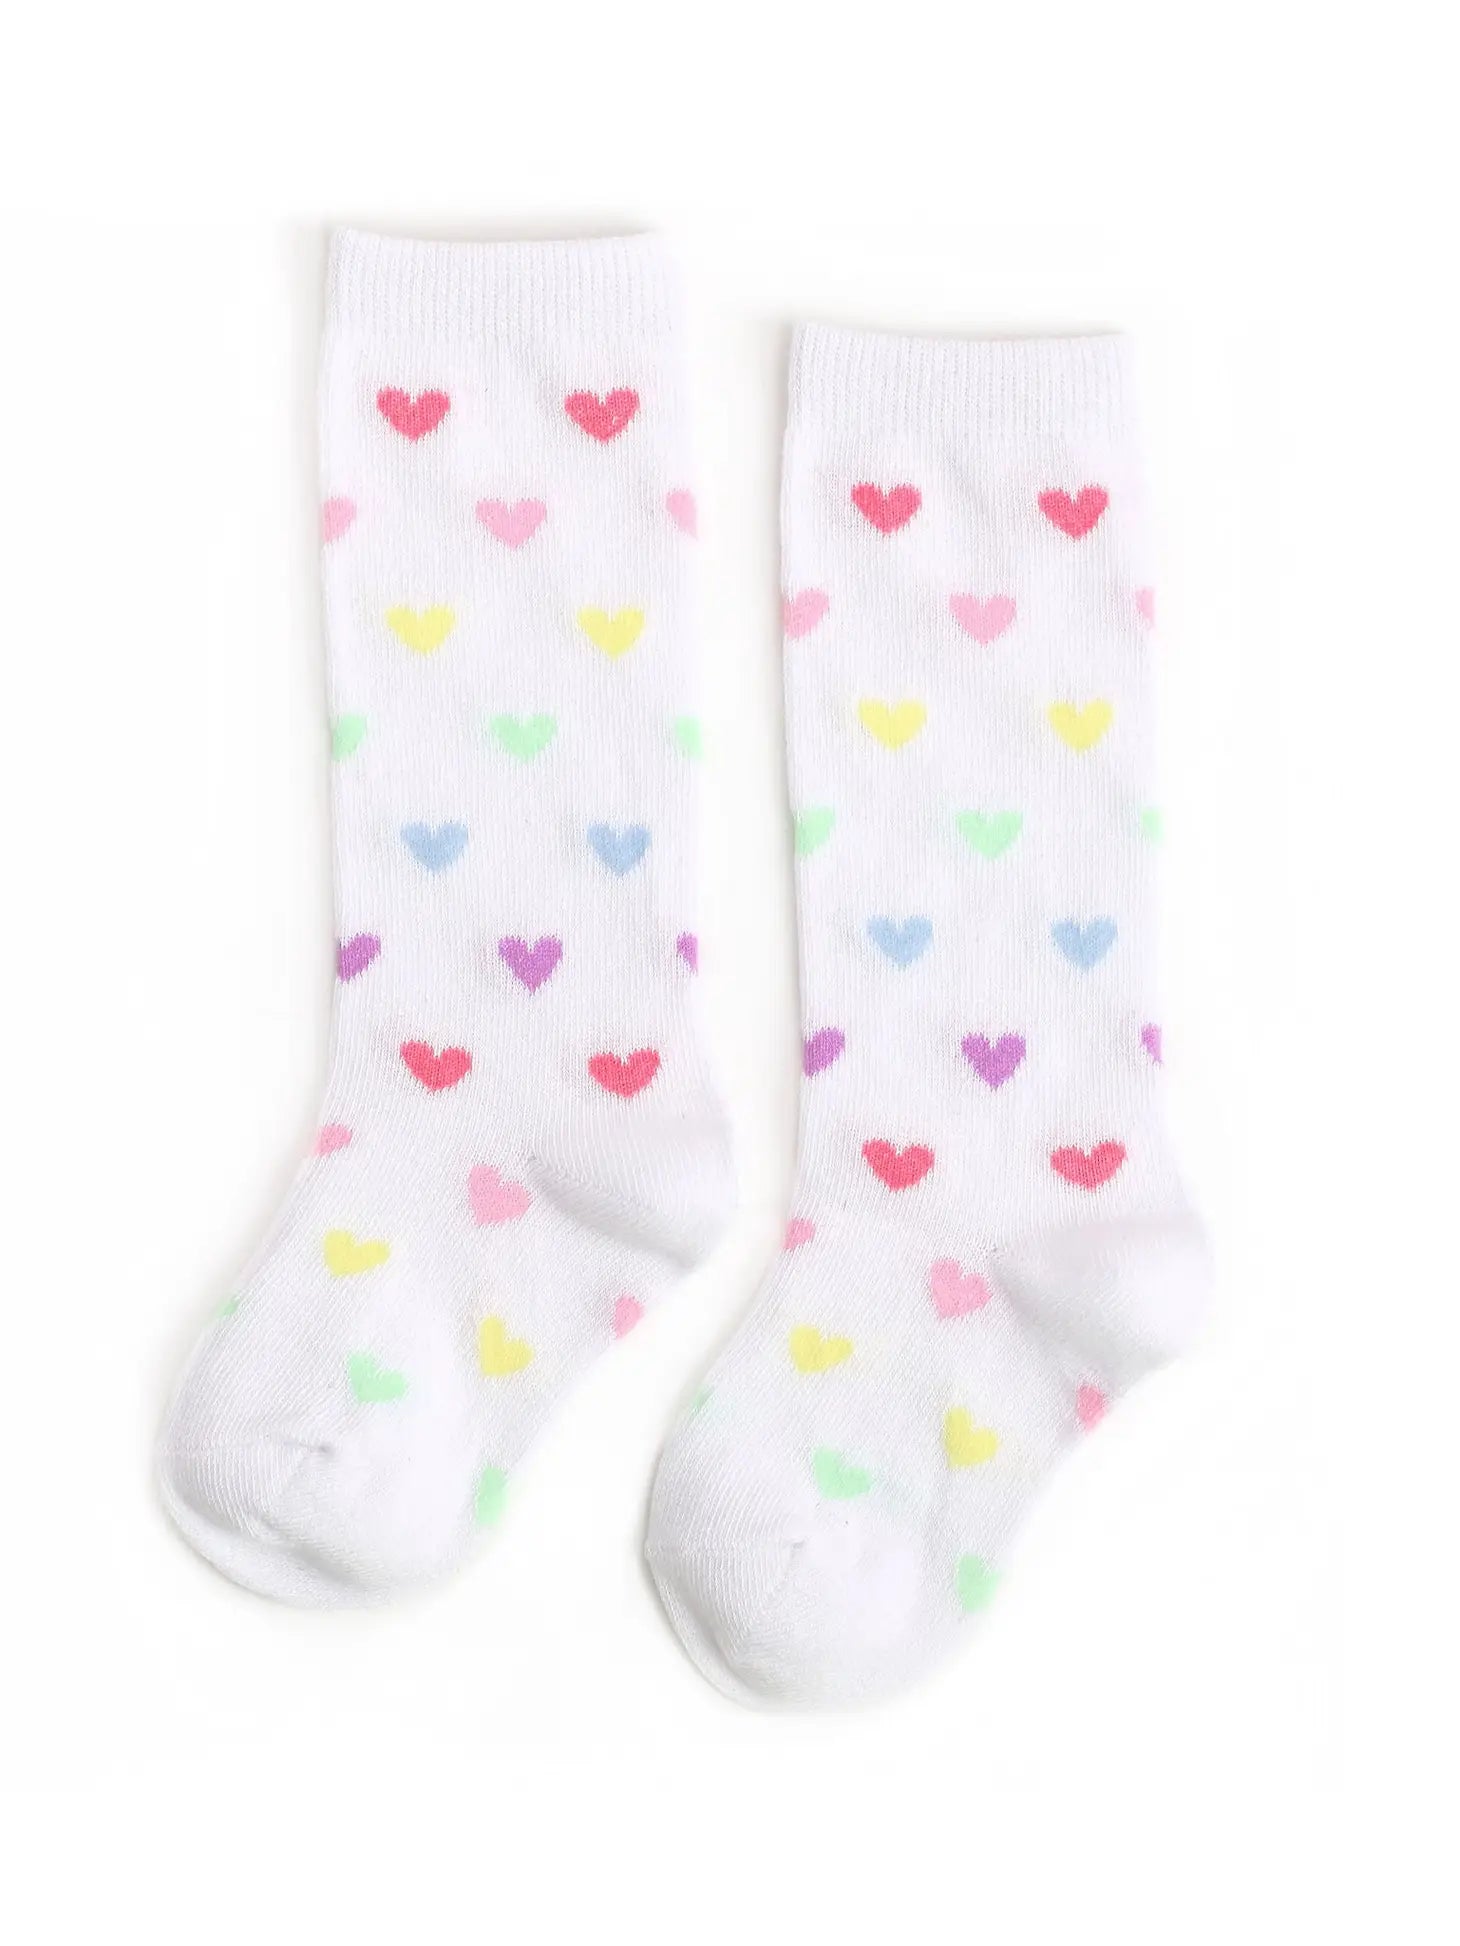 Sweetheart Knee High Socks - Little Stocking Company